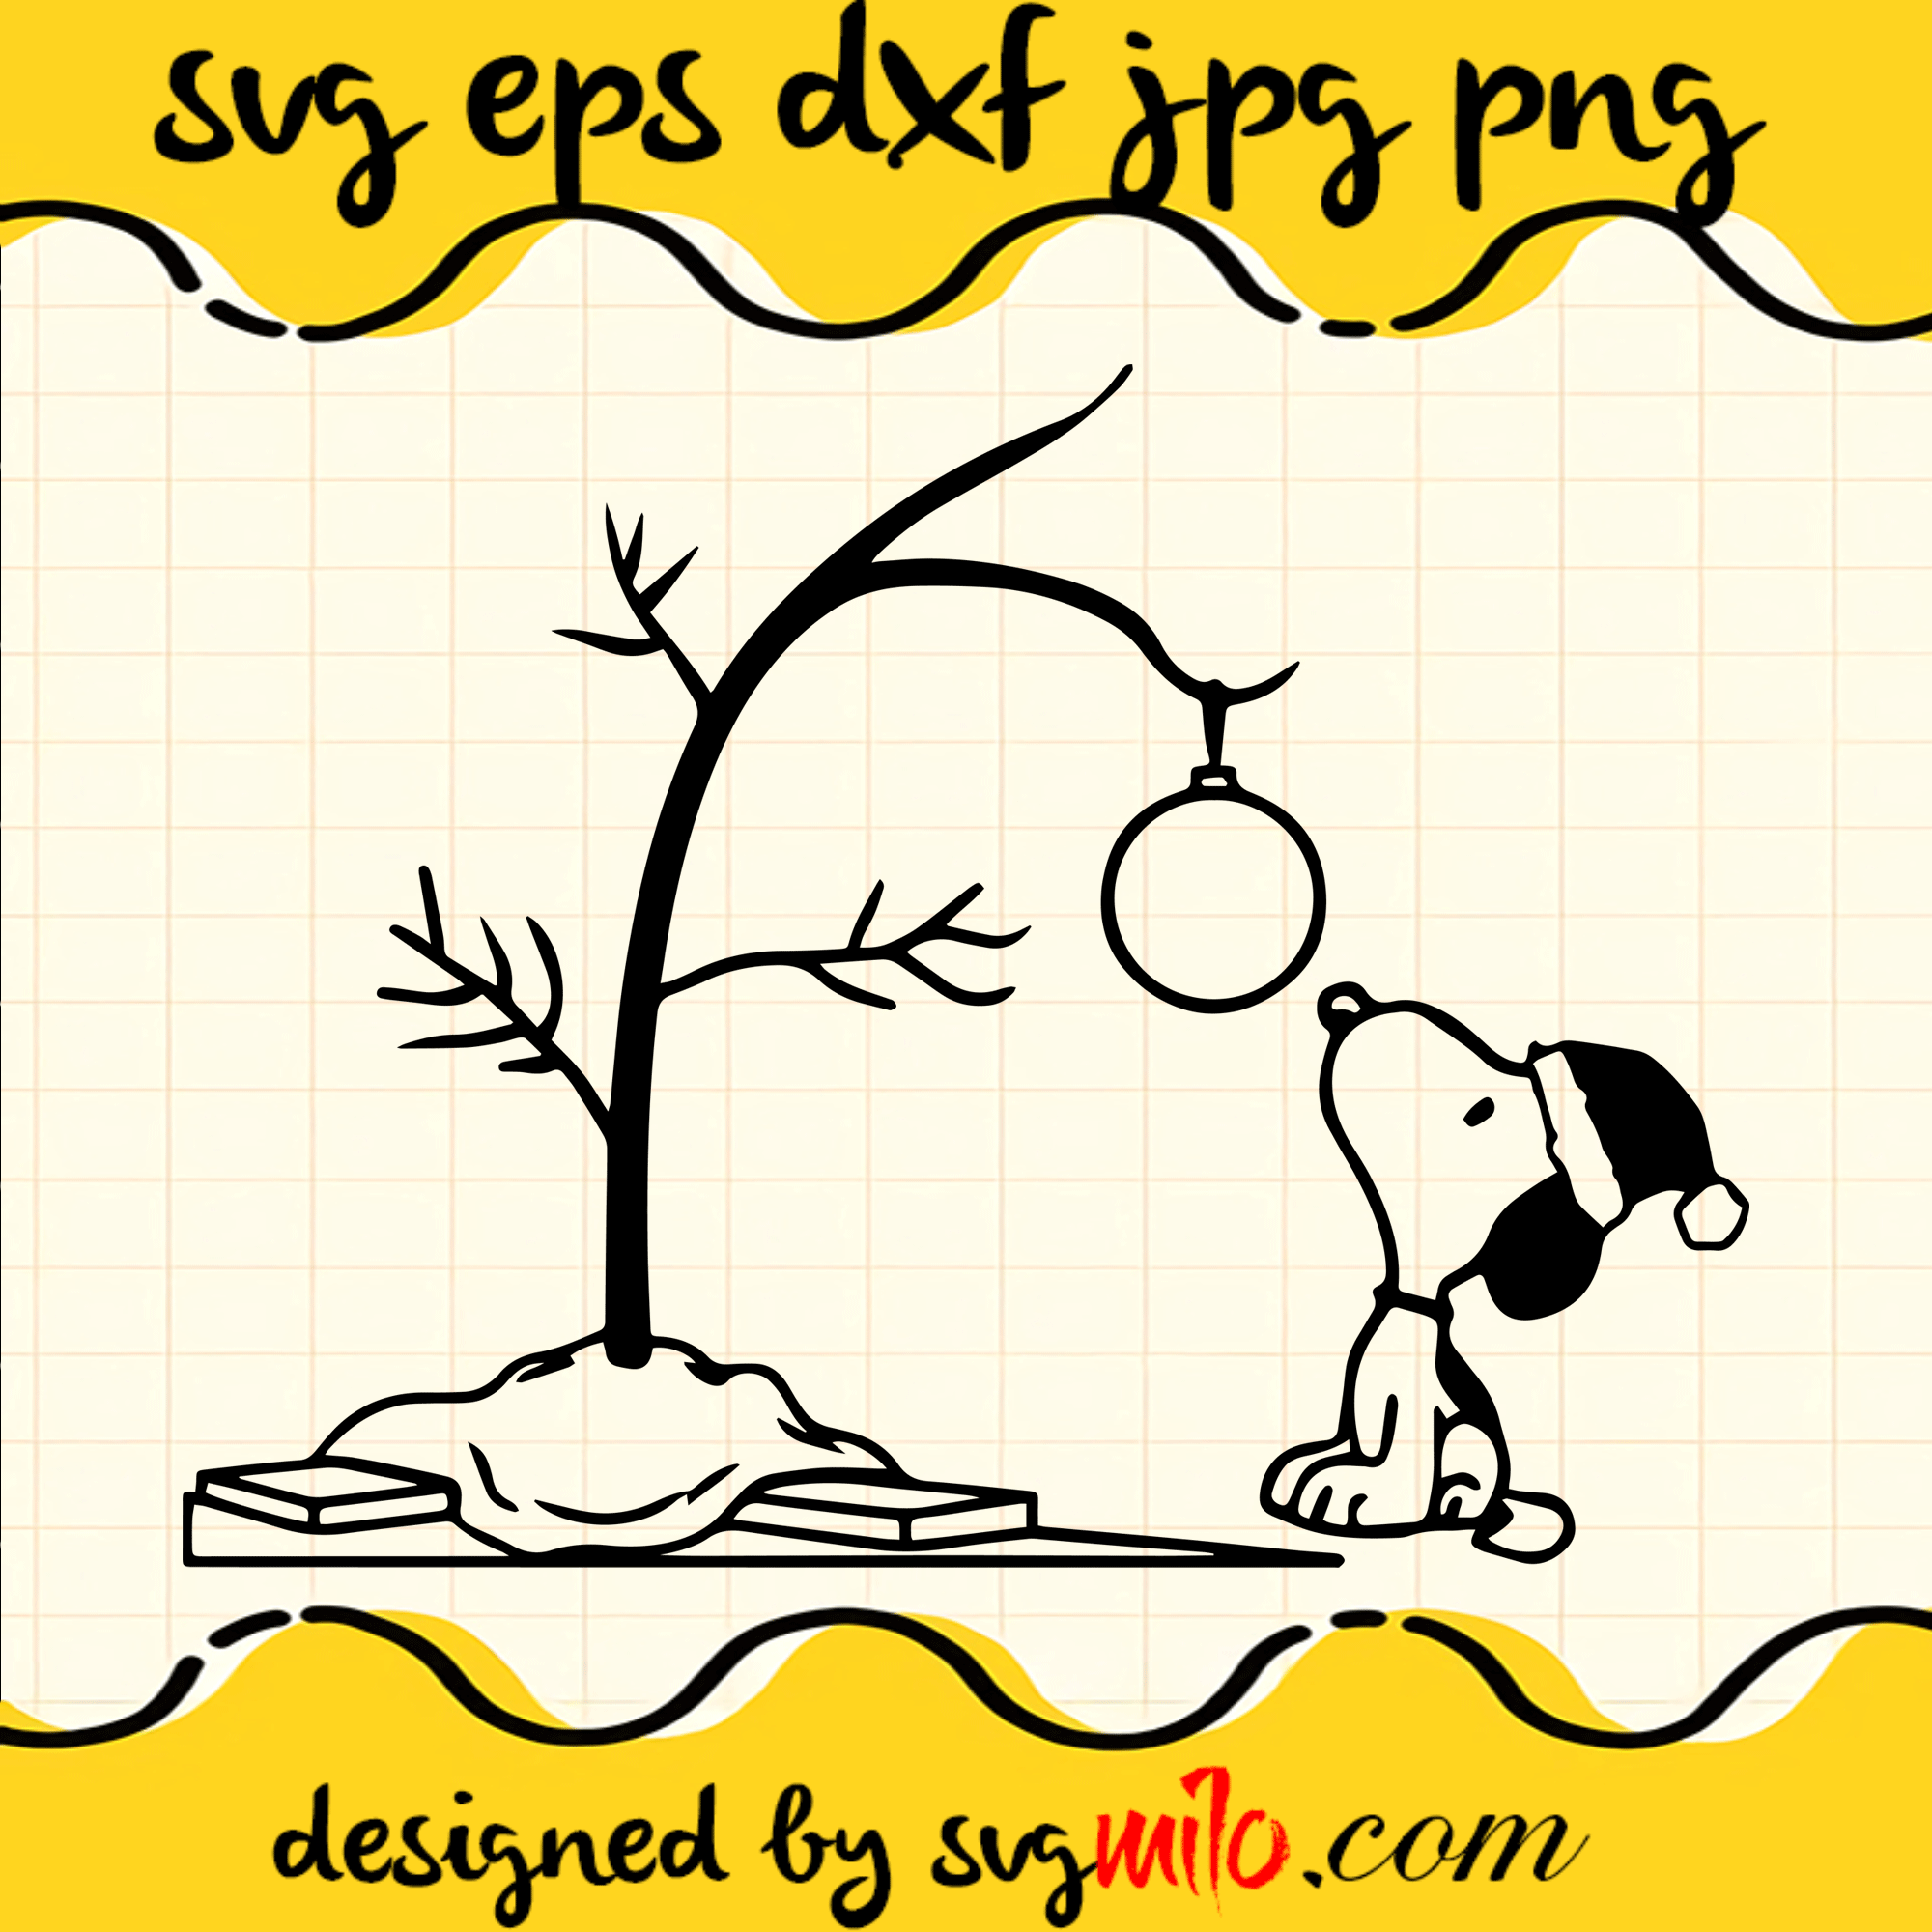 Snoopy SVG, Christmas SVG, Santa Snoopy SVG, EPS, PNG, DXF, Premium Quality - SVGMILO